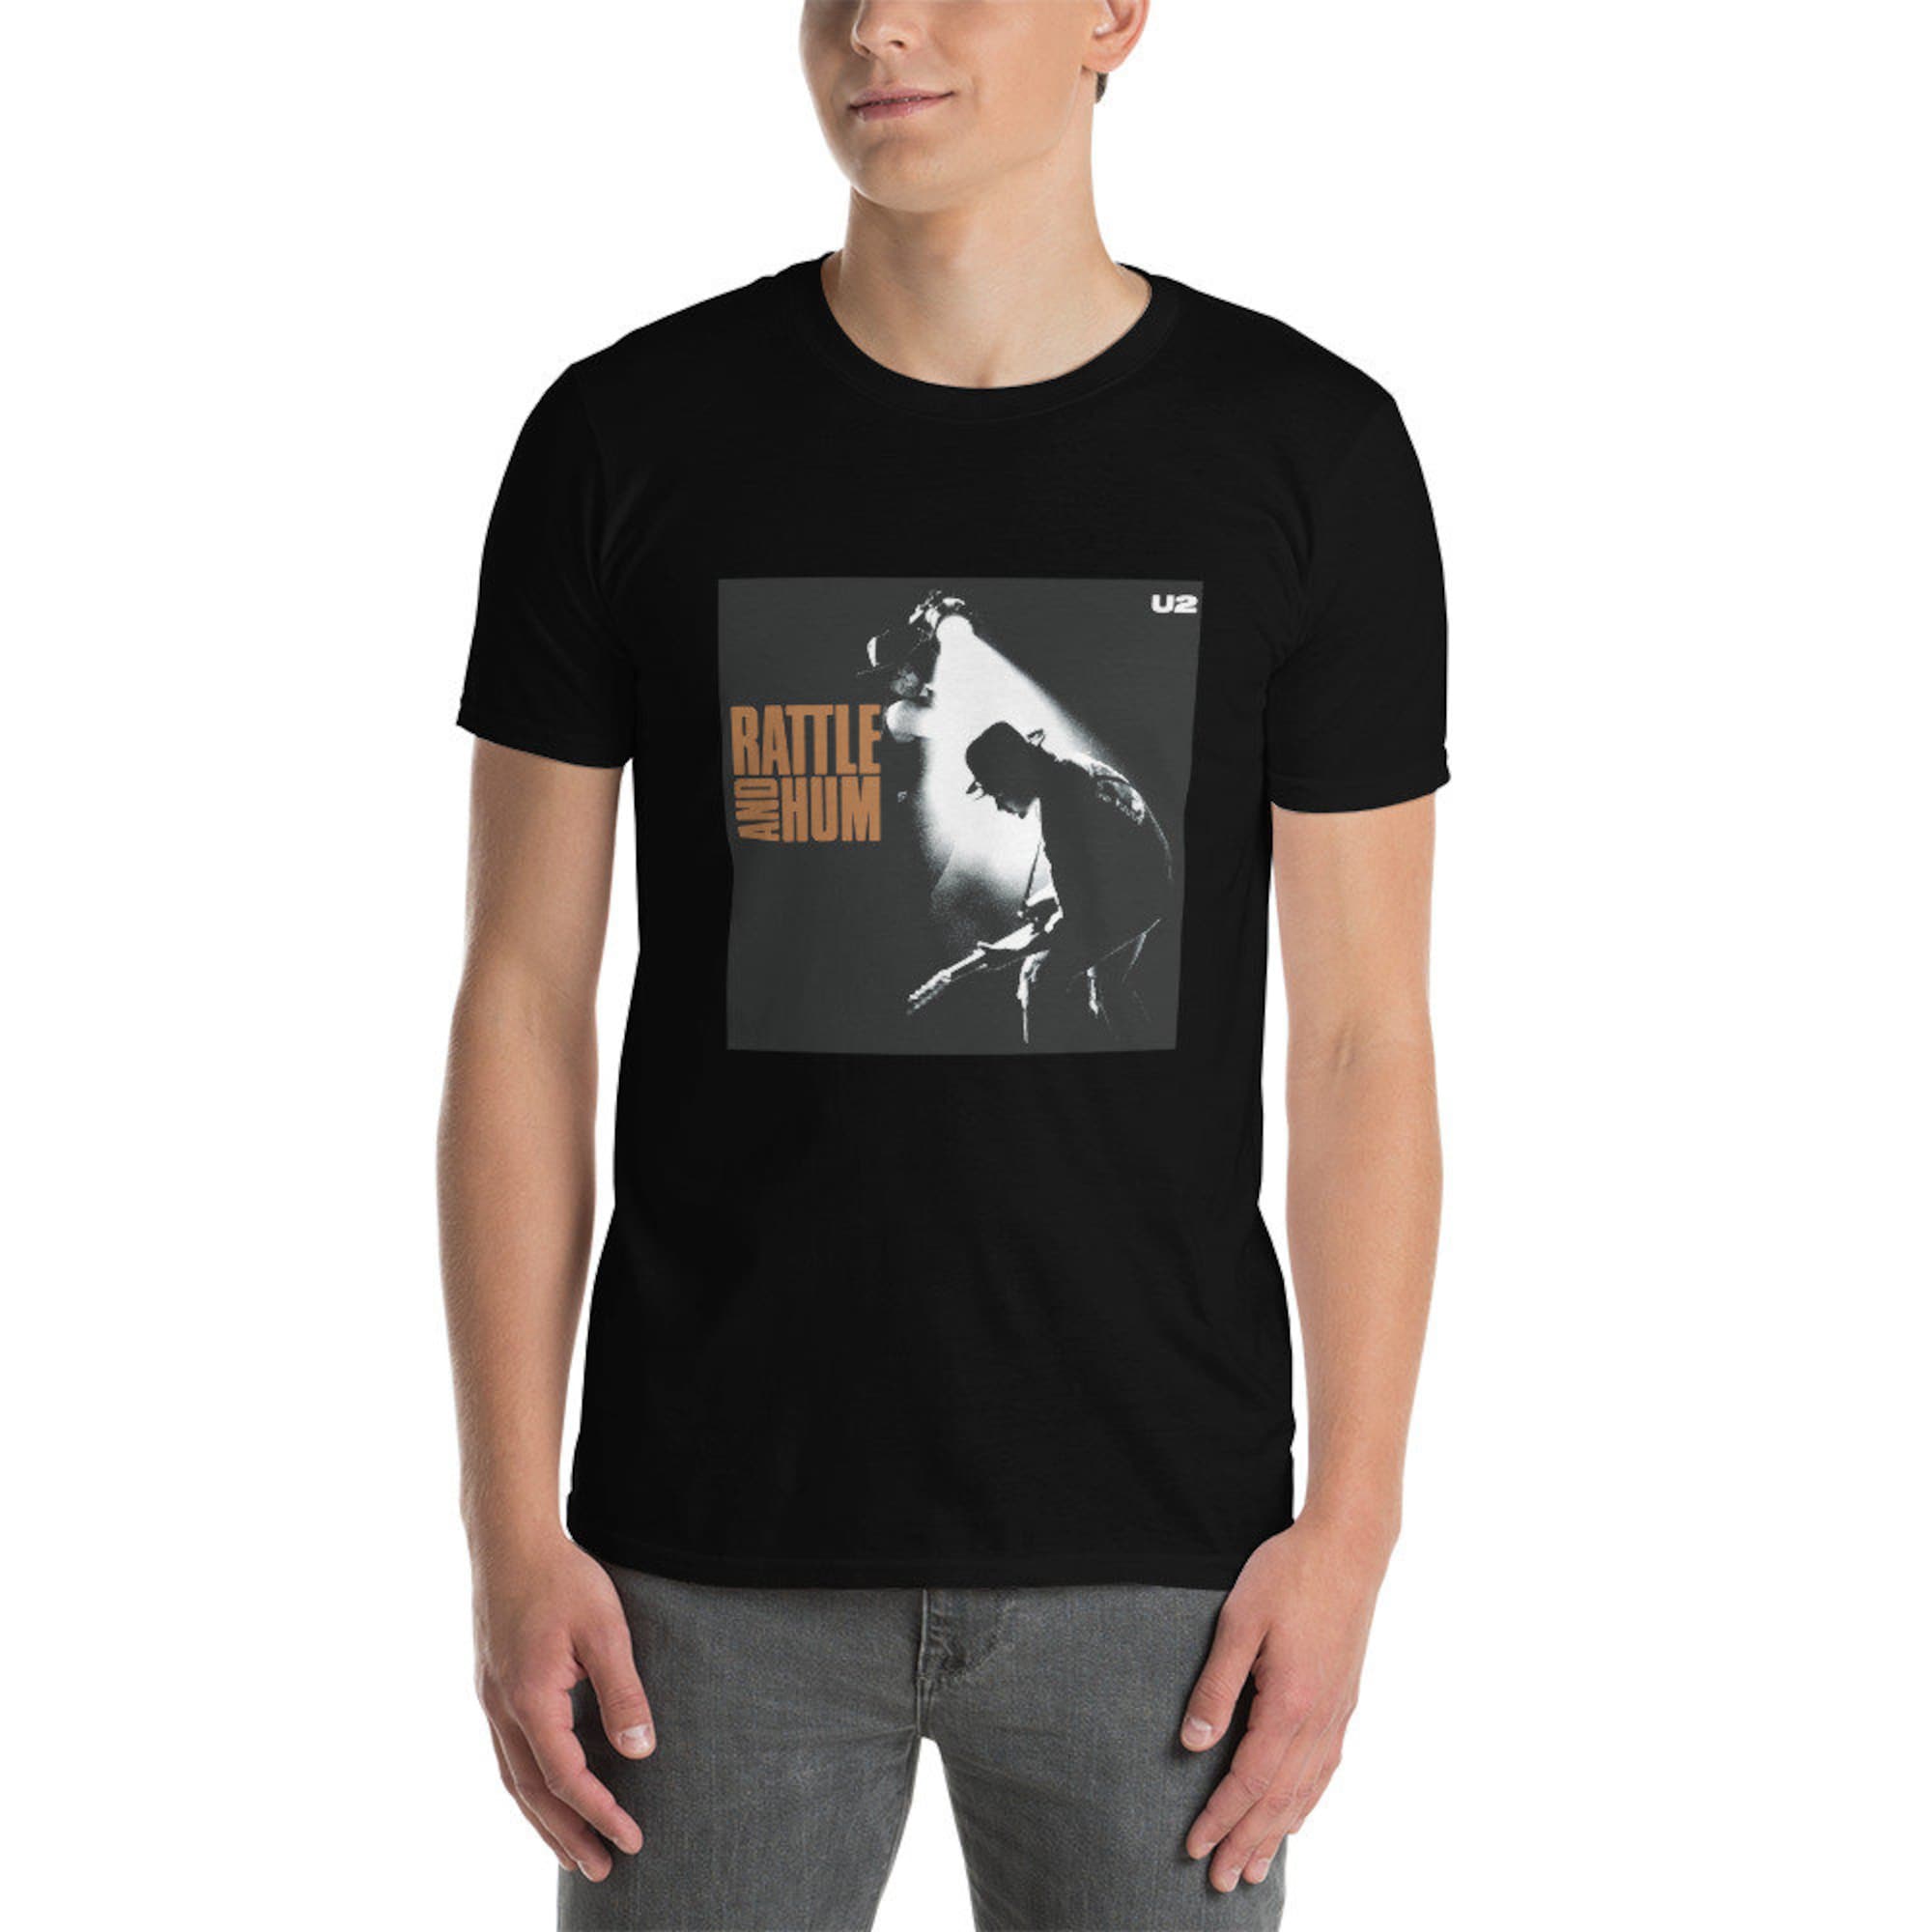 Discover U2 Rassel & Hum Album T-Shirt